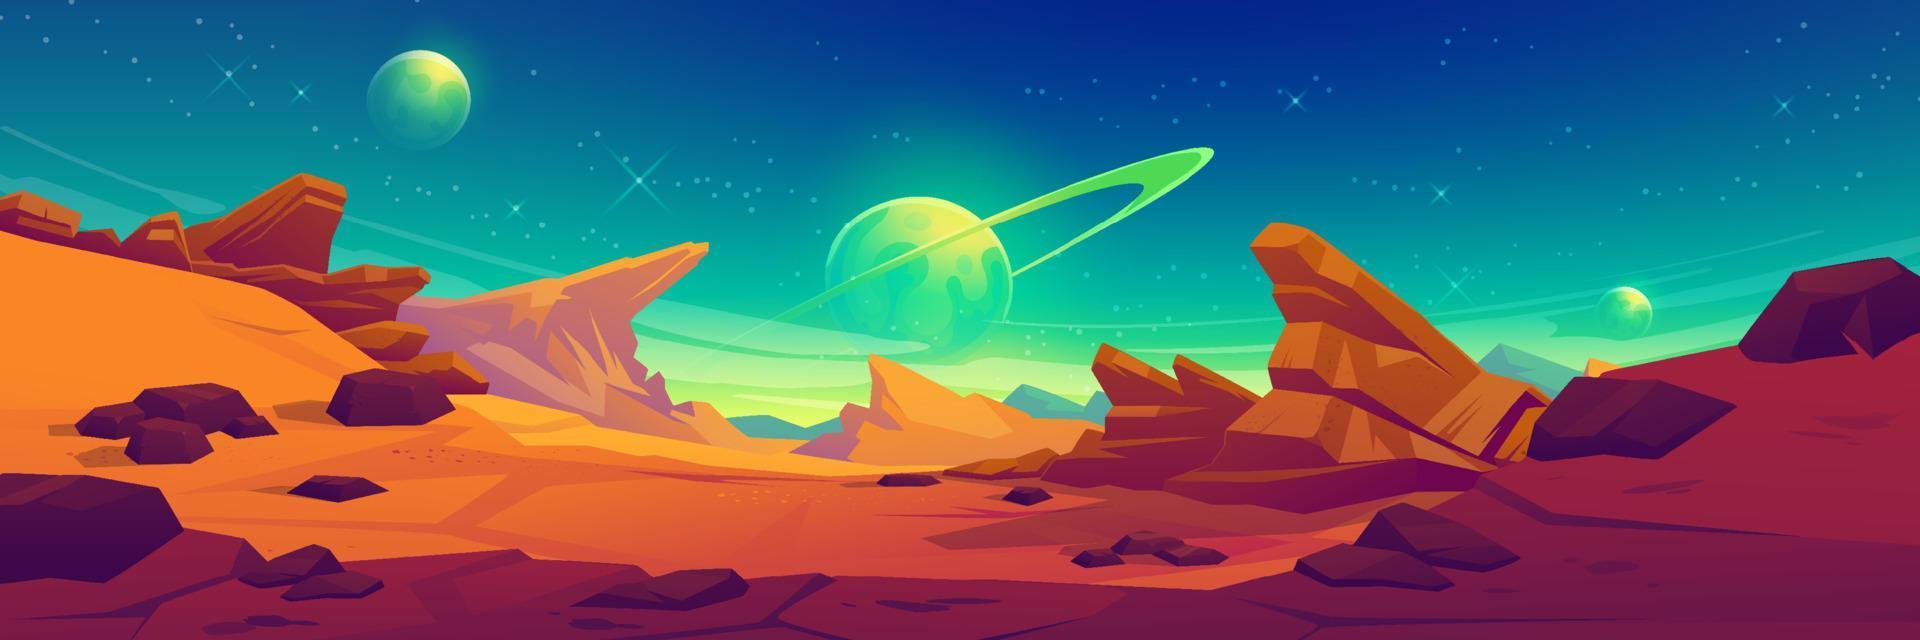 superficie de marte, paisaje de planeta alienígena vector